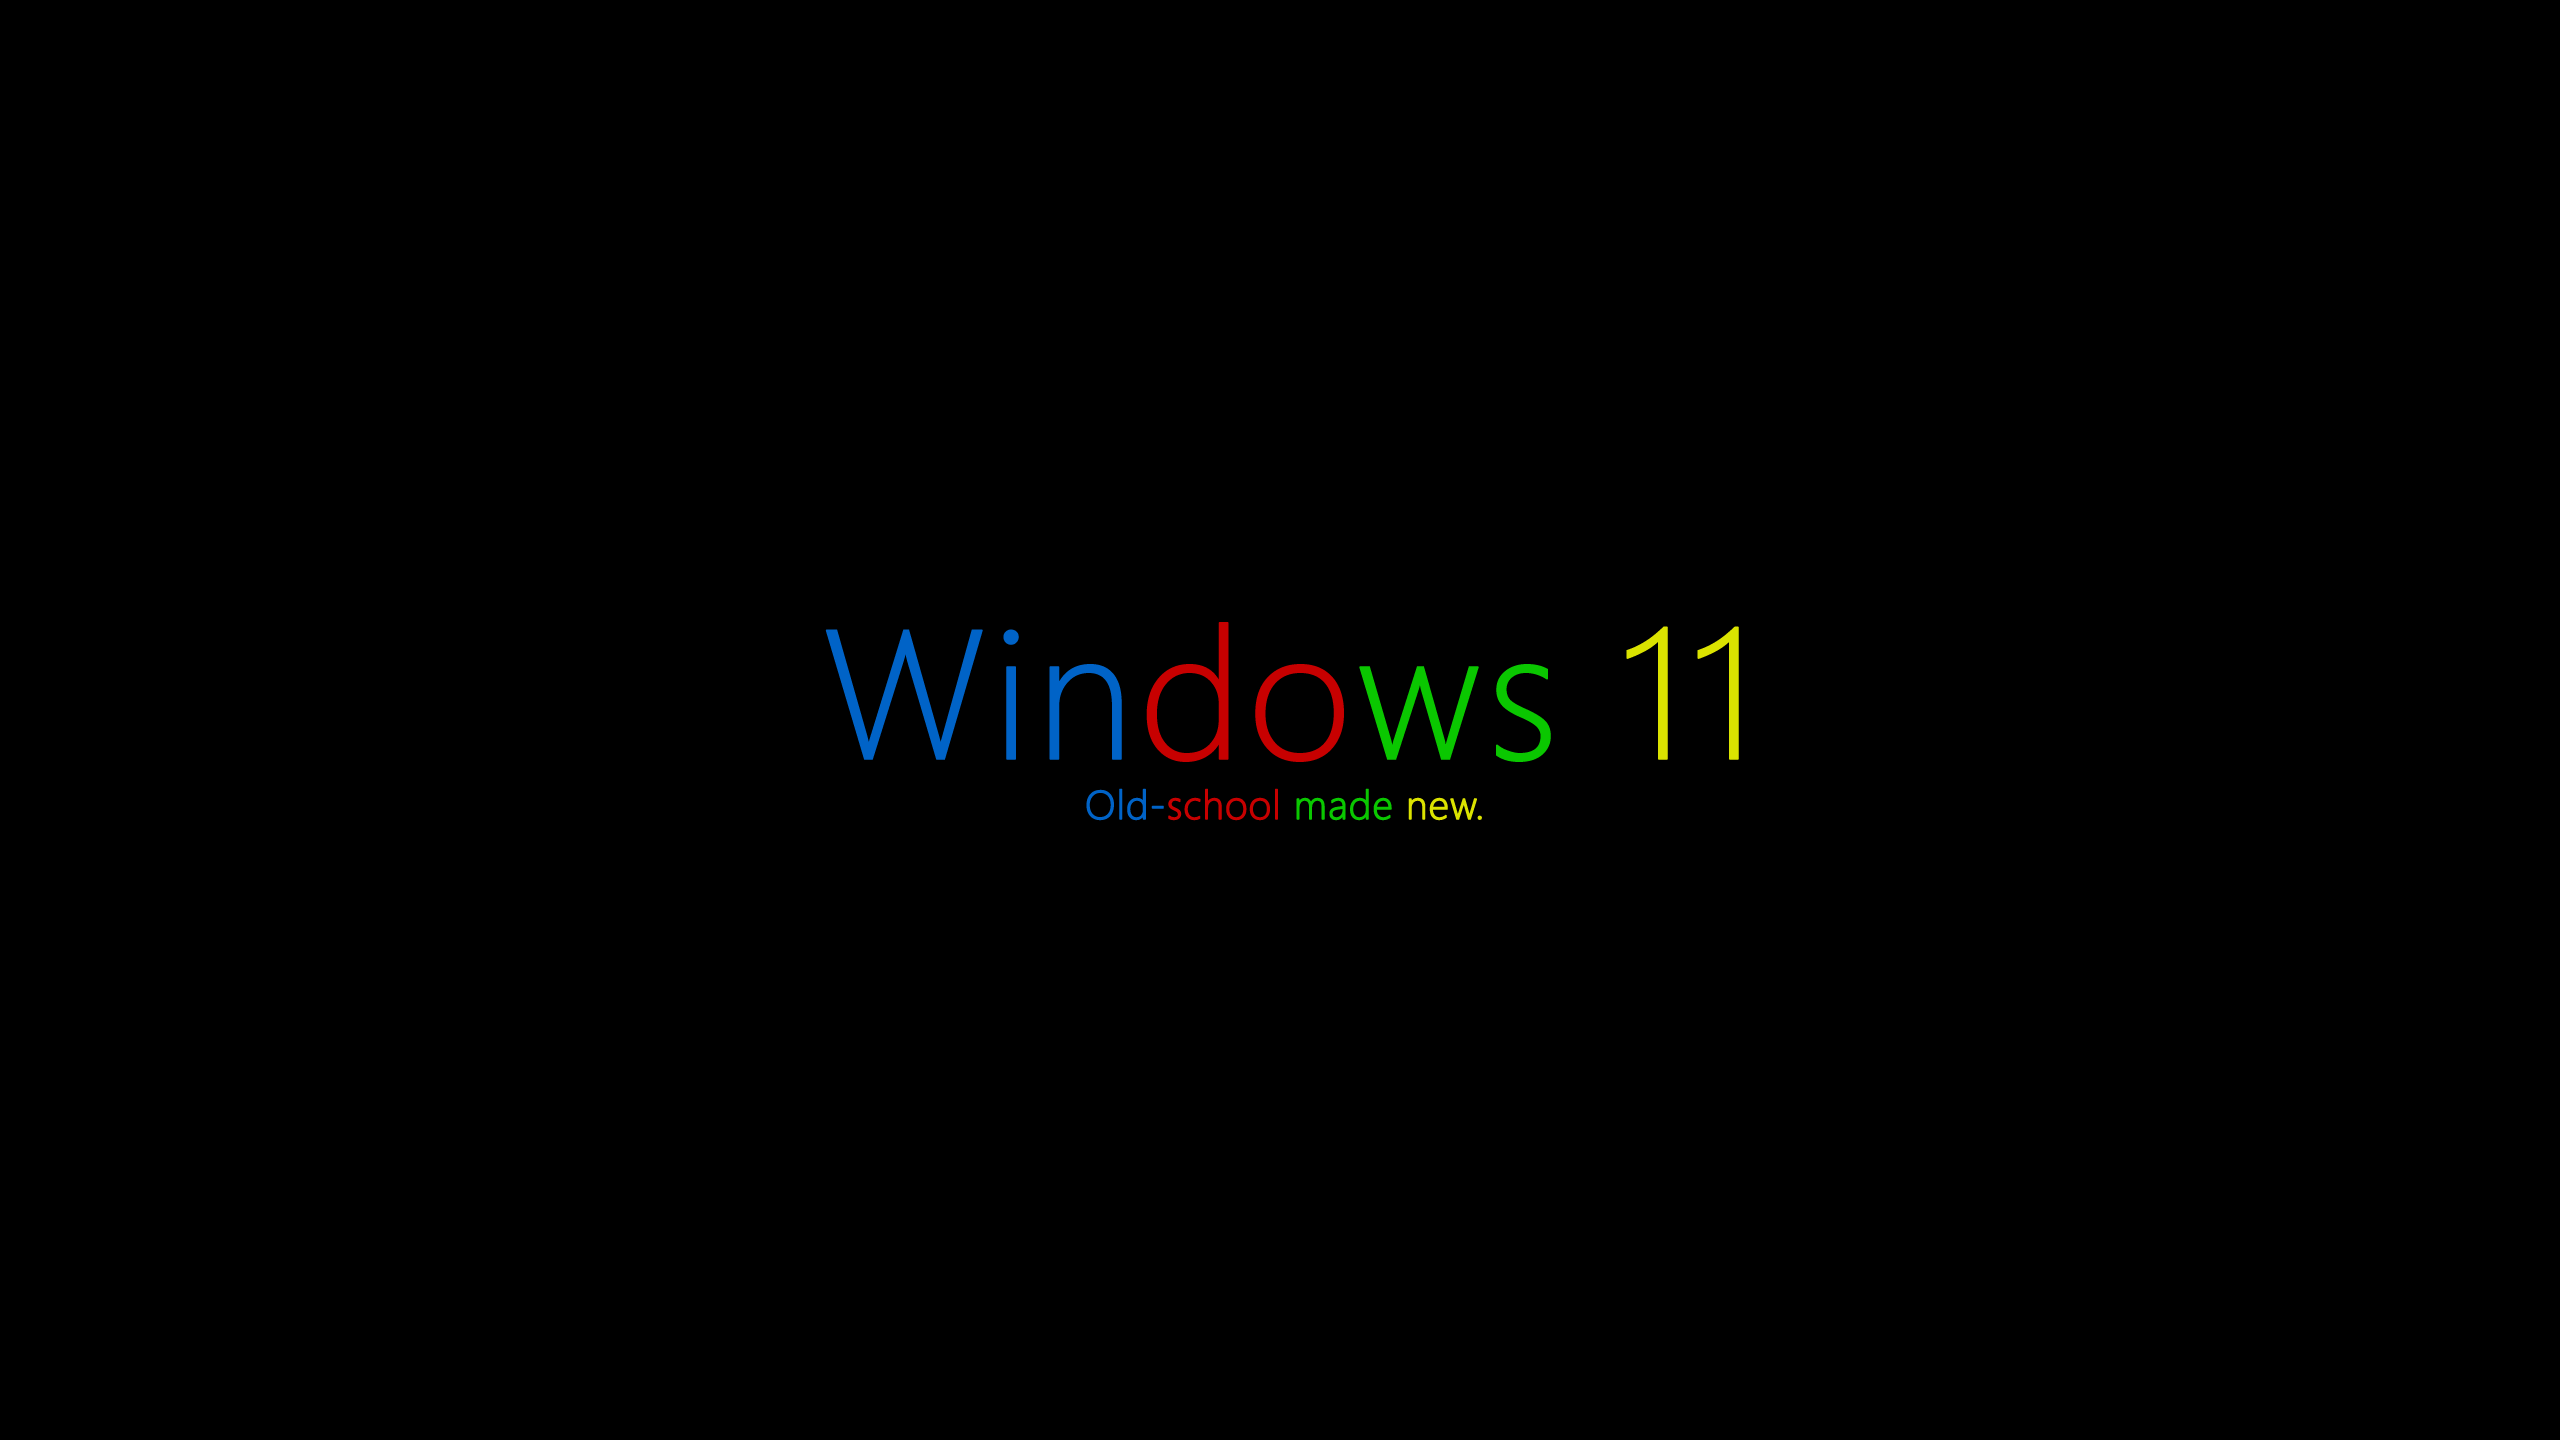 Windows 11 Wallpaper HD 4K Free Download